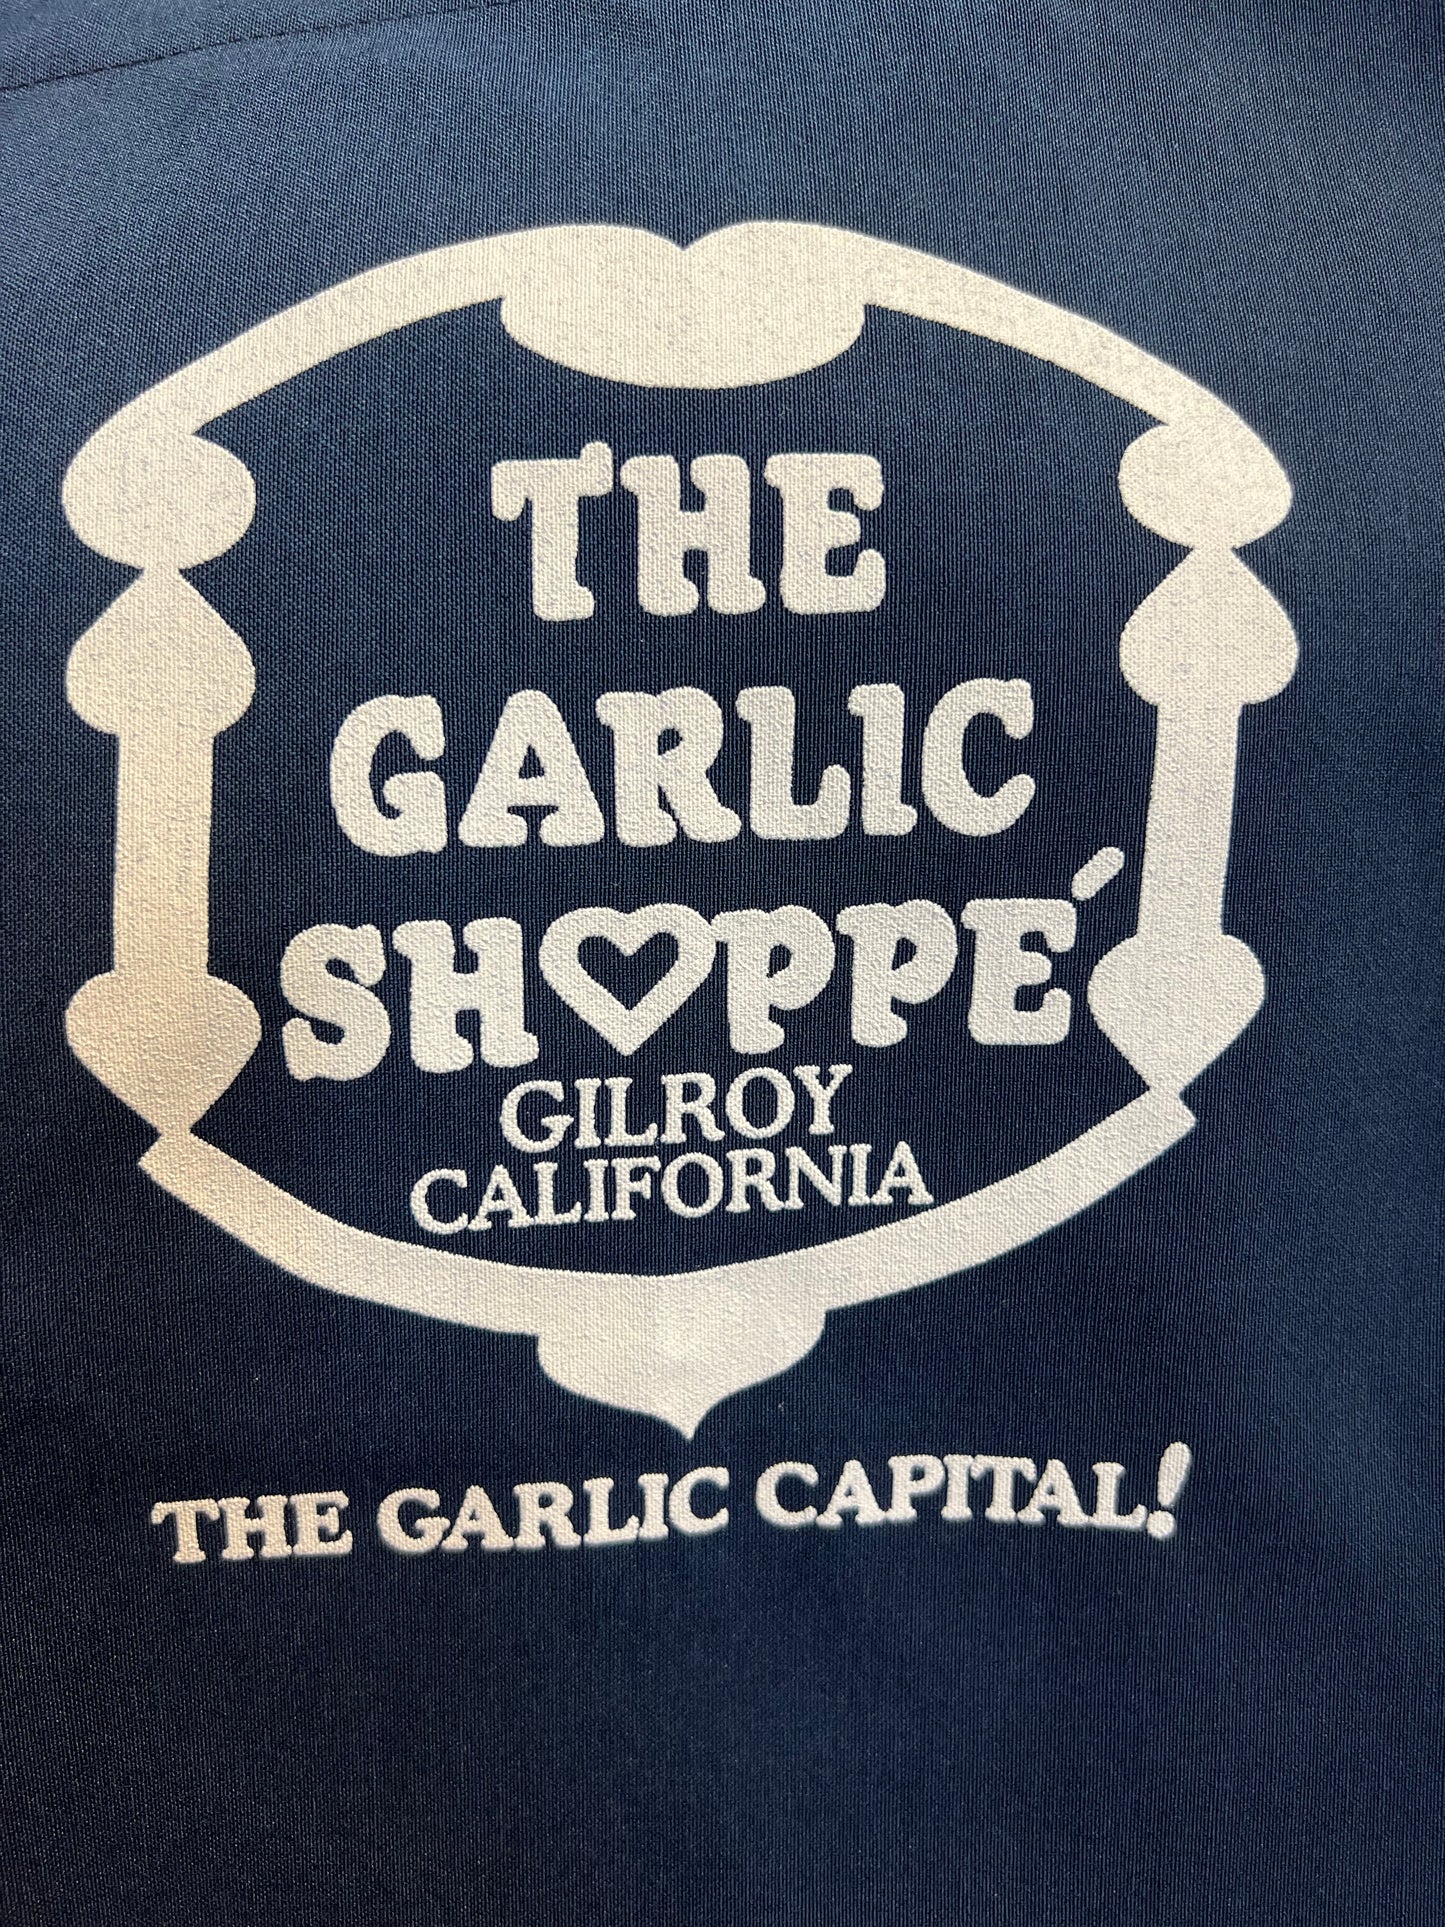 Delantal The Garlic Shoppe Logo Serigrafiado $9.98